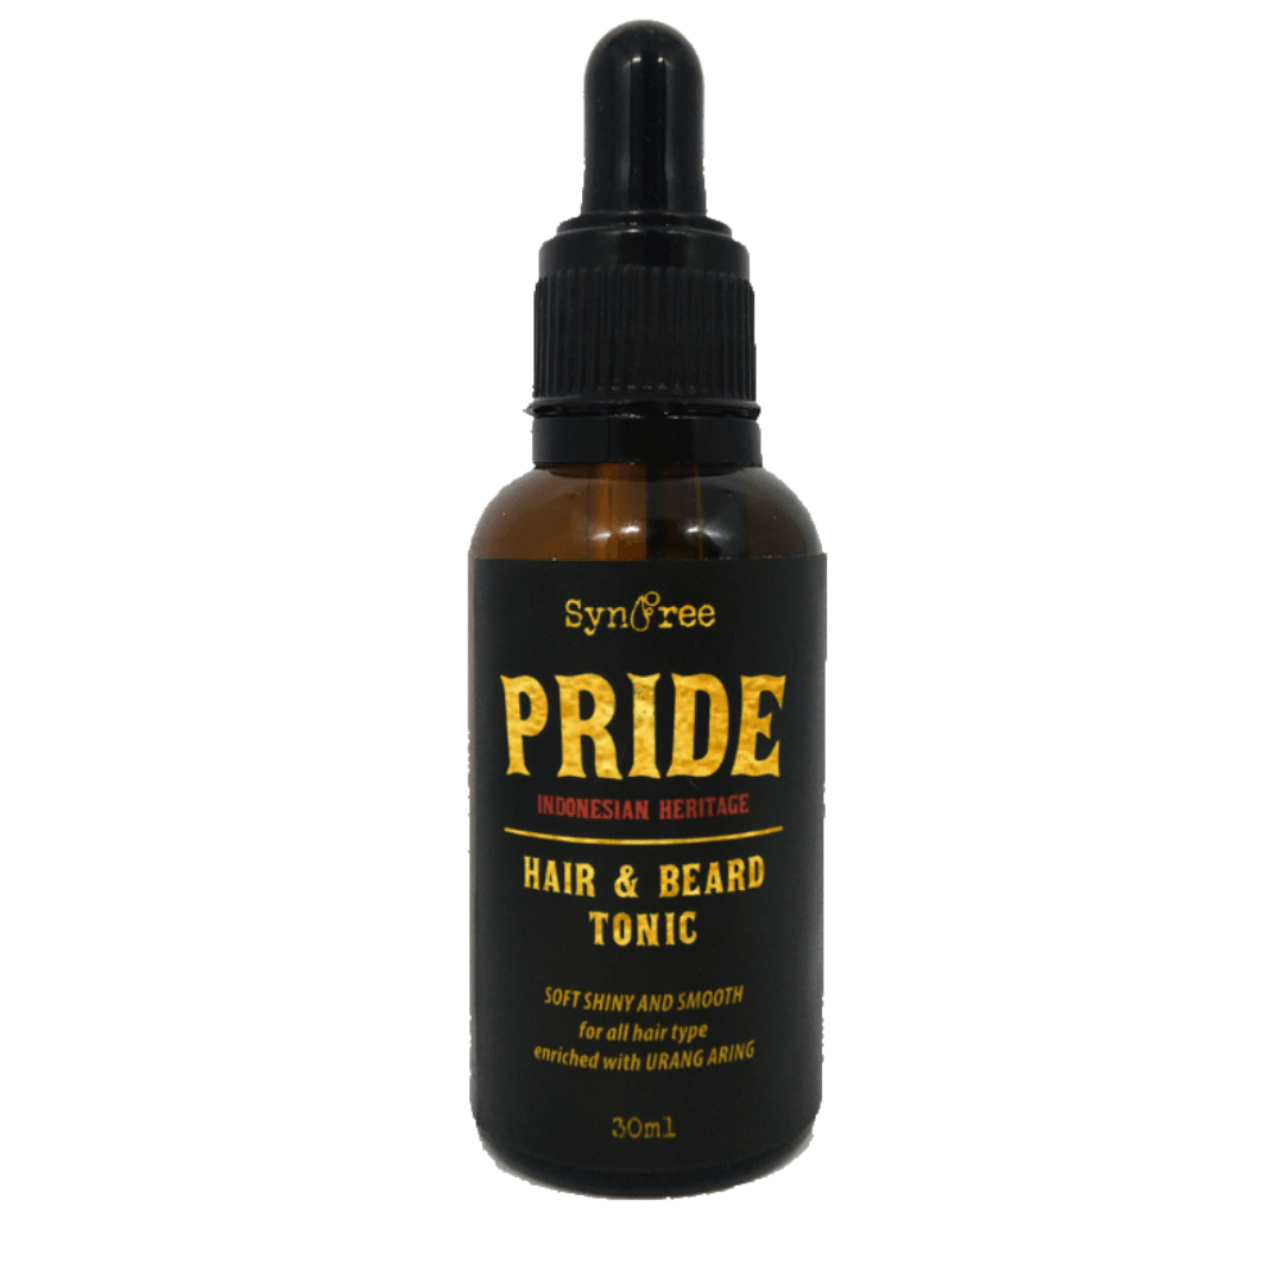 Pride Hair & Beard Tonic Oil - Expat Life Style